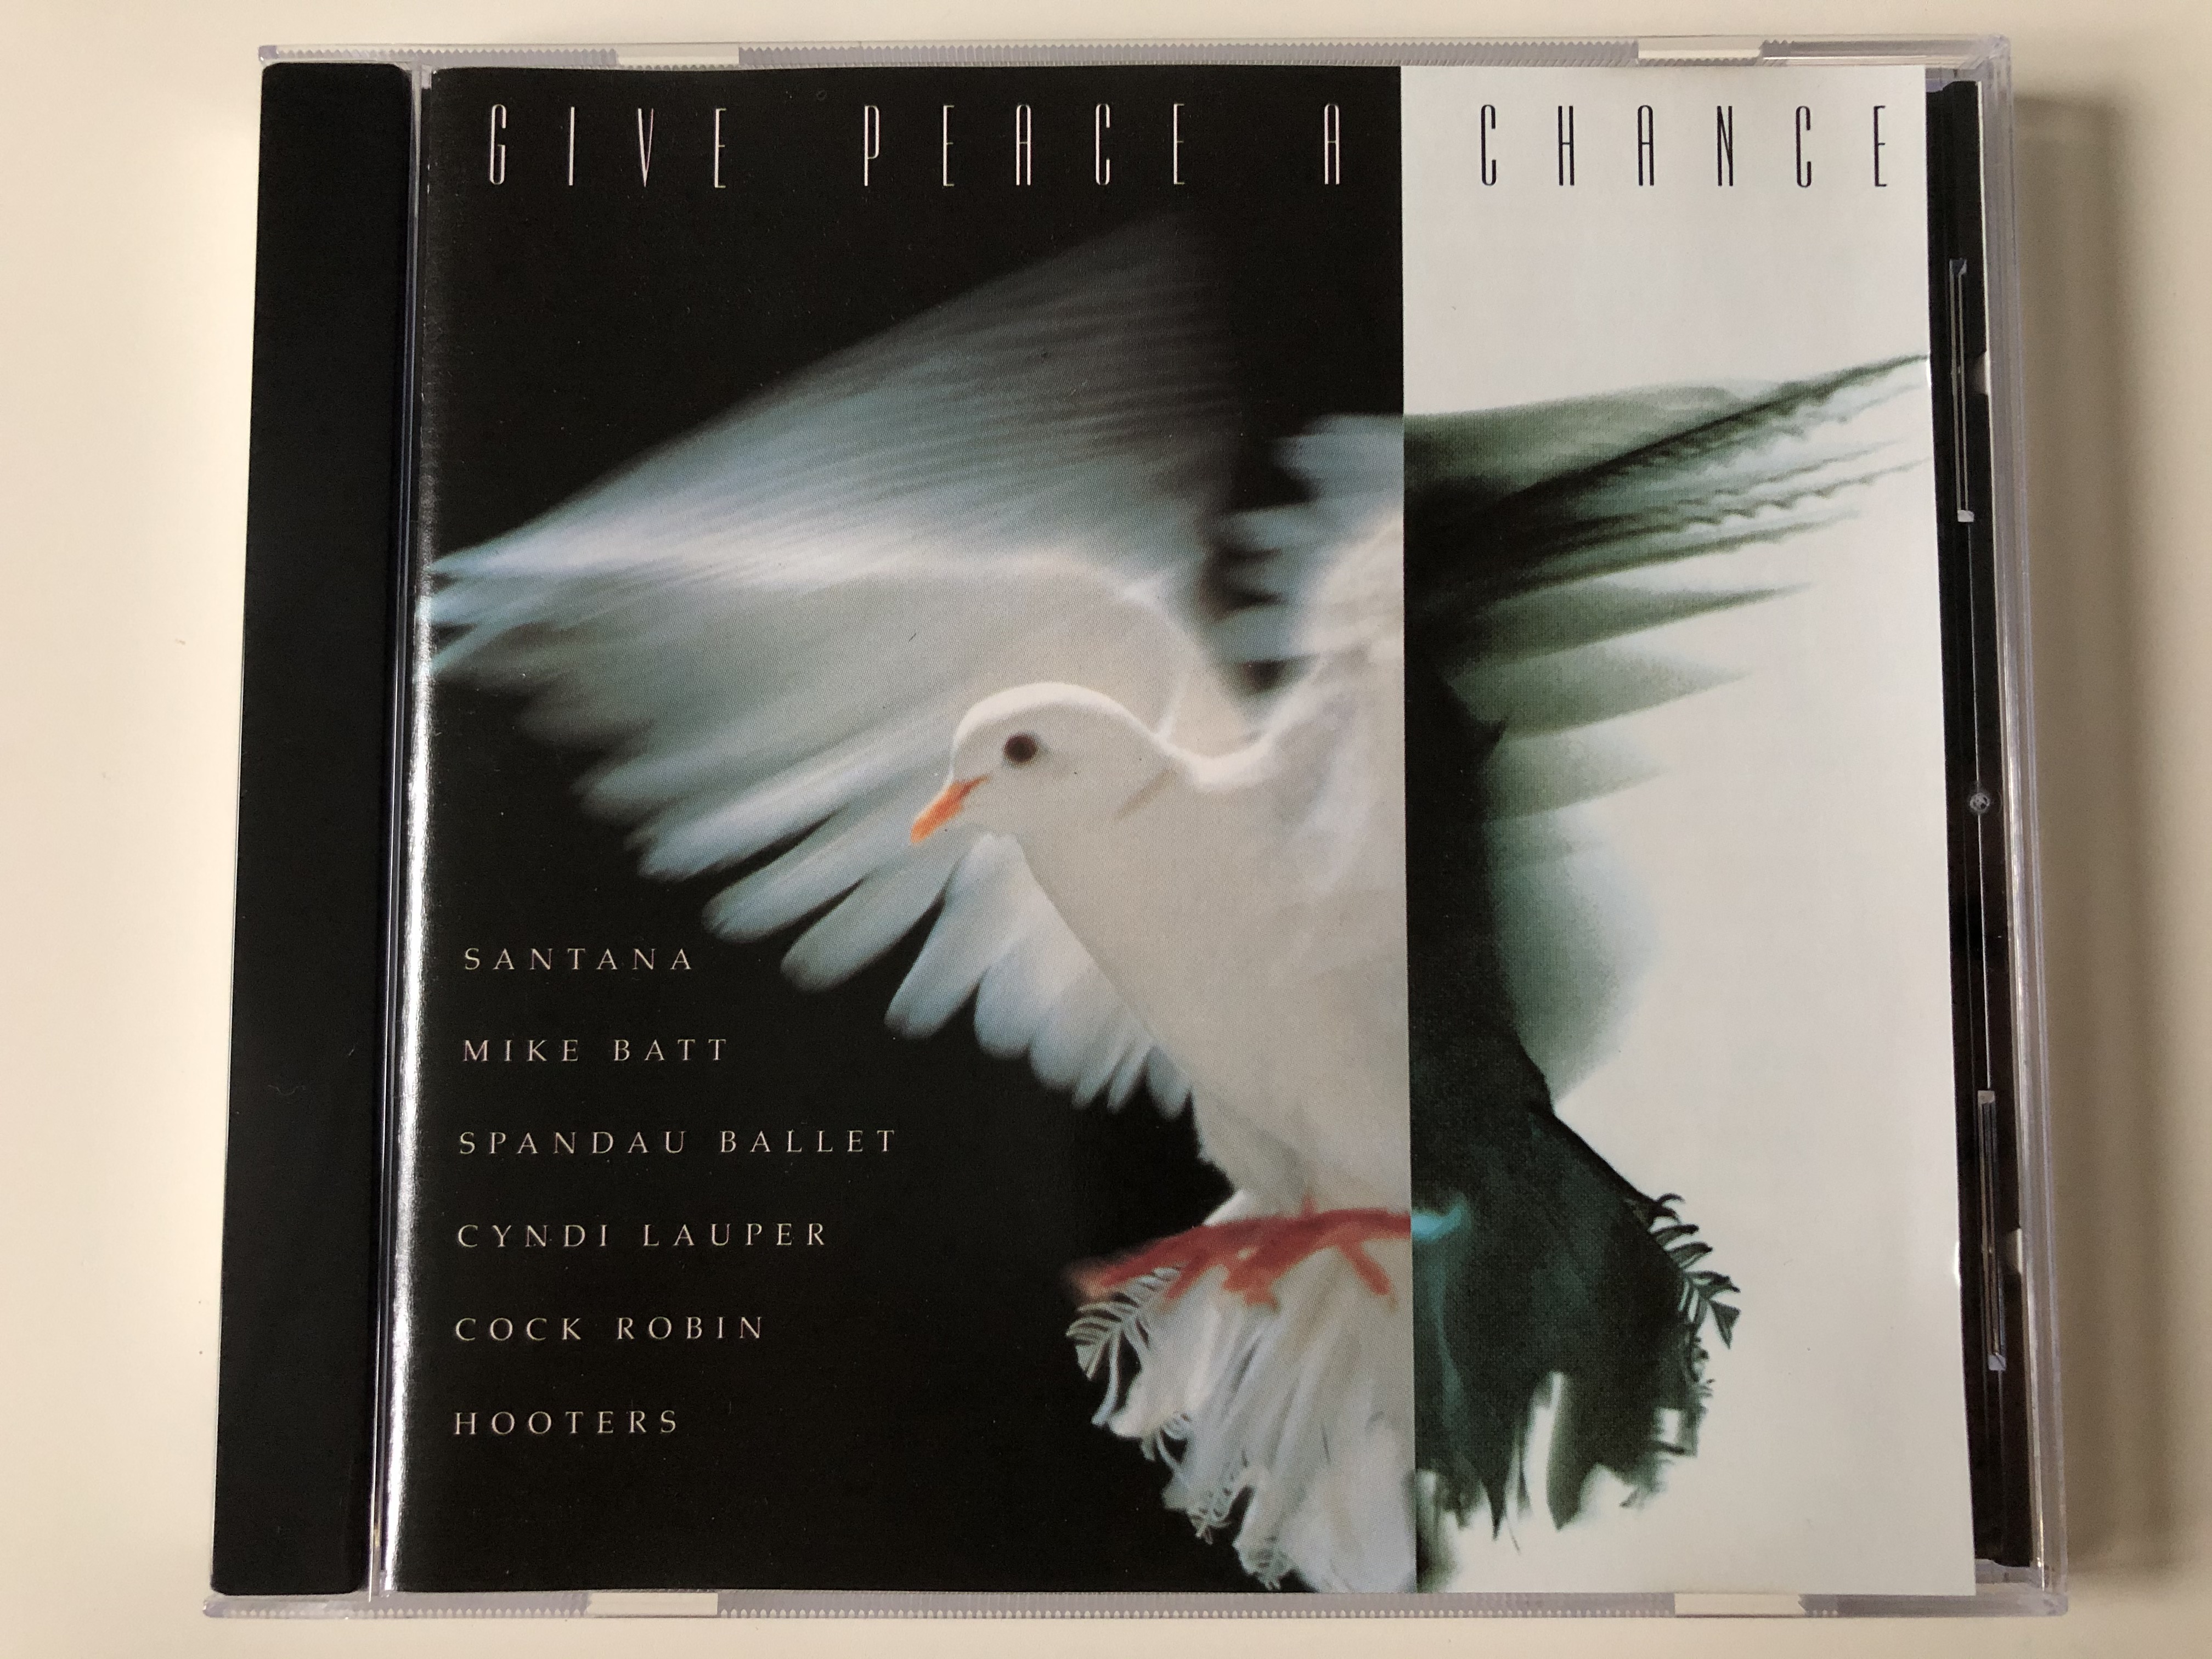 give-peace-a-chance-santana-mike-batt-spandau-ballet-cyndi-lauper-cock-robin-hooters-columbia-audio-cd-1993-col-474326-2-1-.jpg